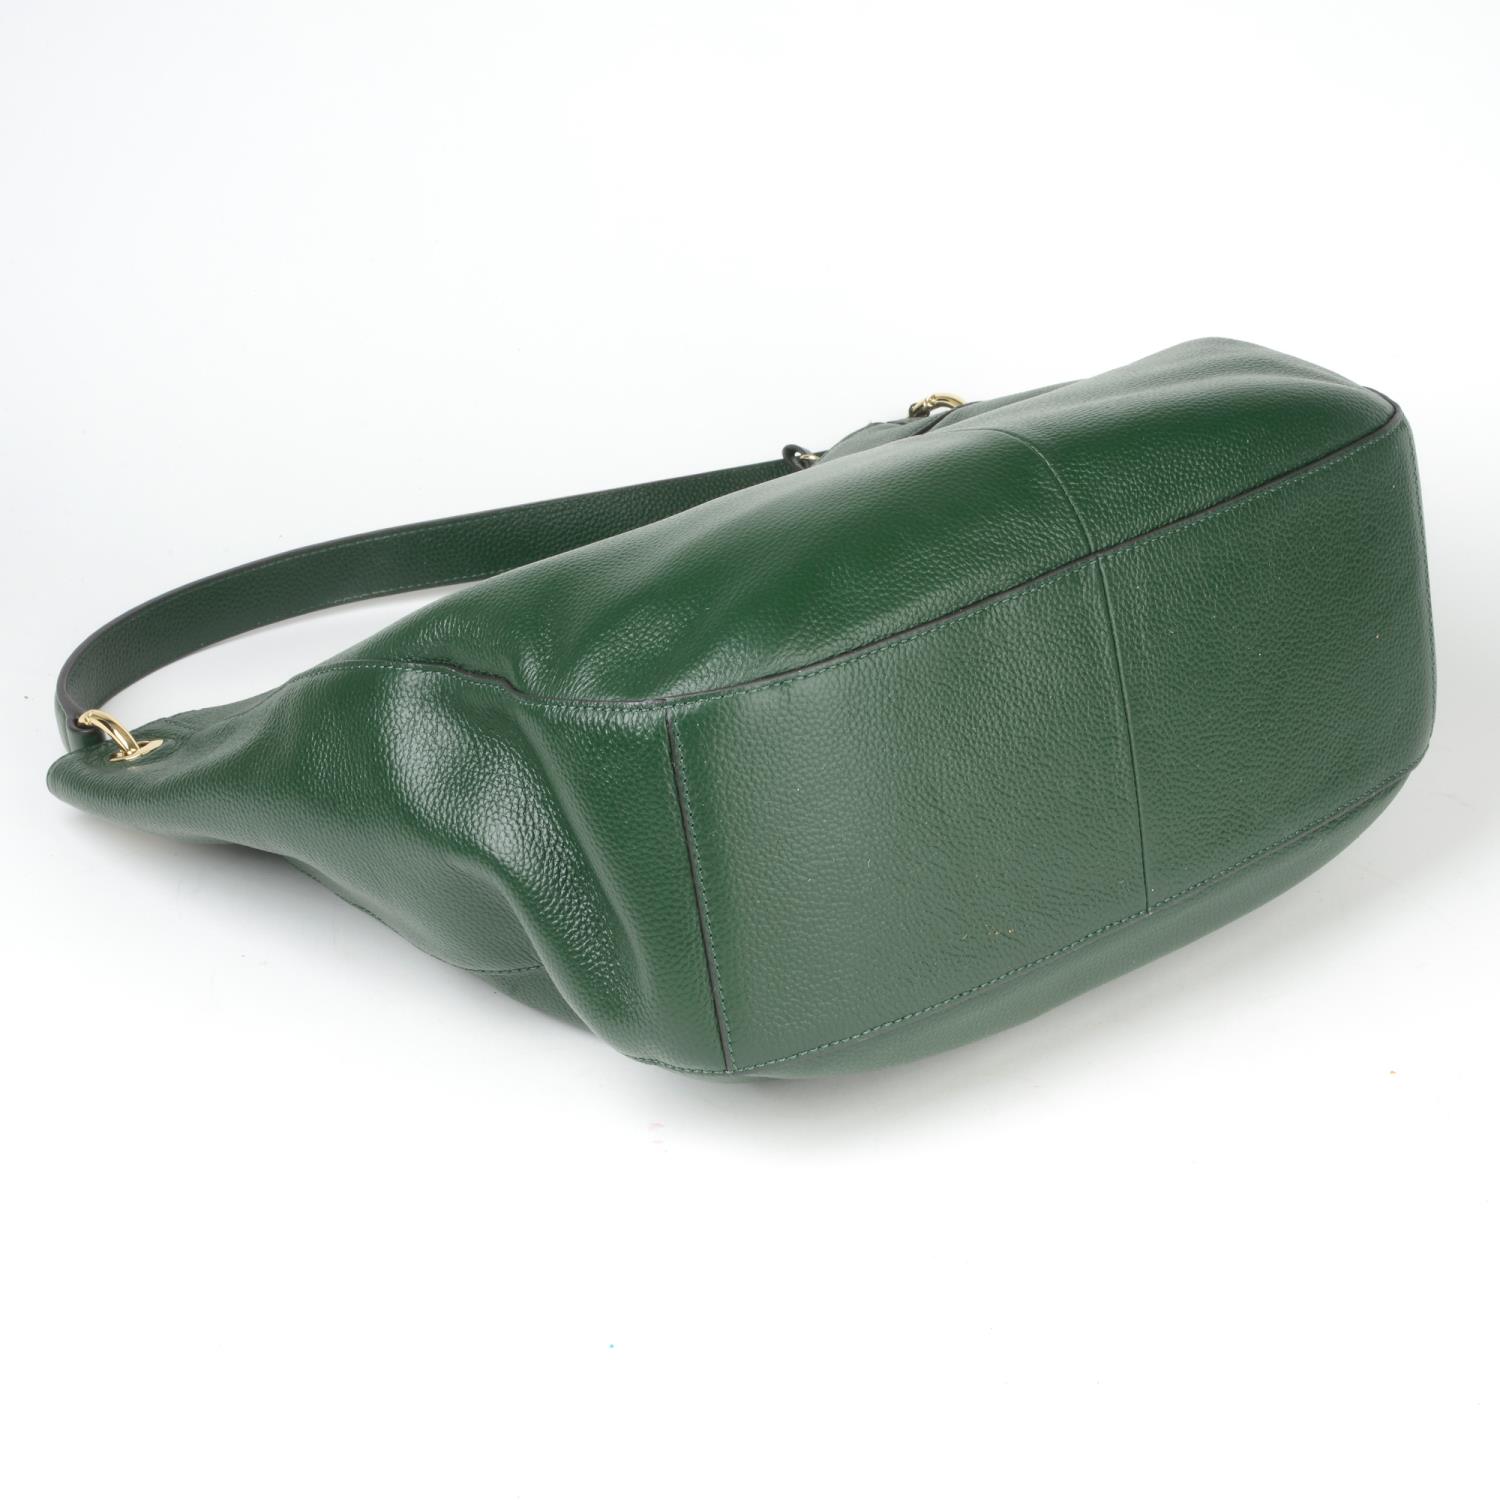 CAVALLO MODA - two leather handbags. - Image 3 of 4